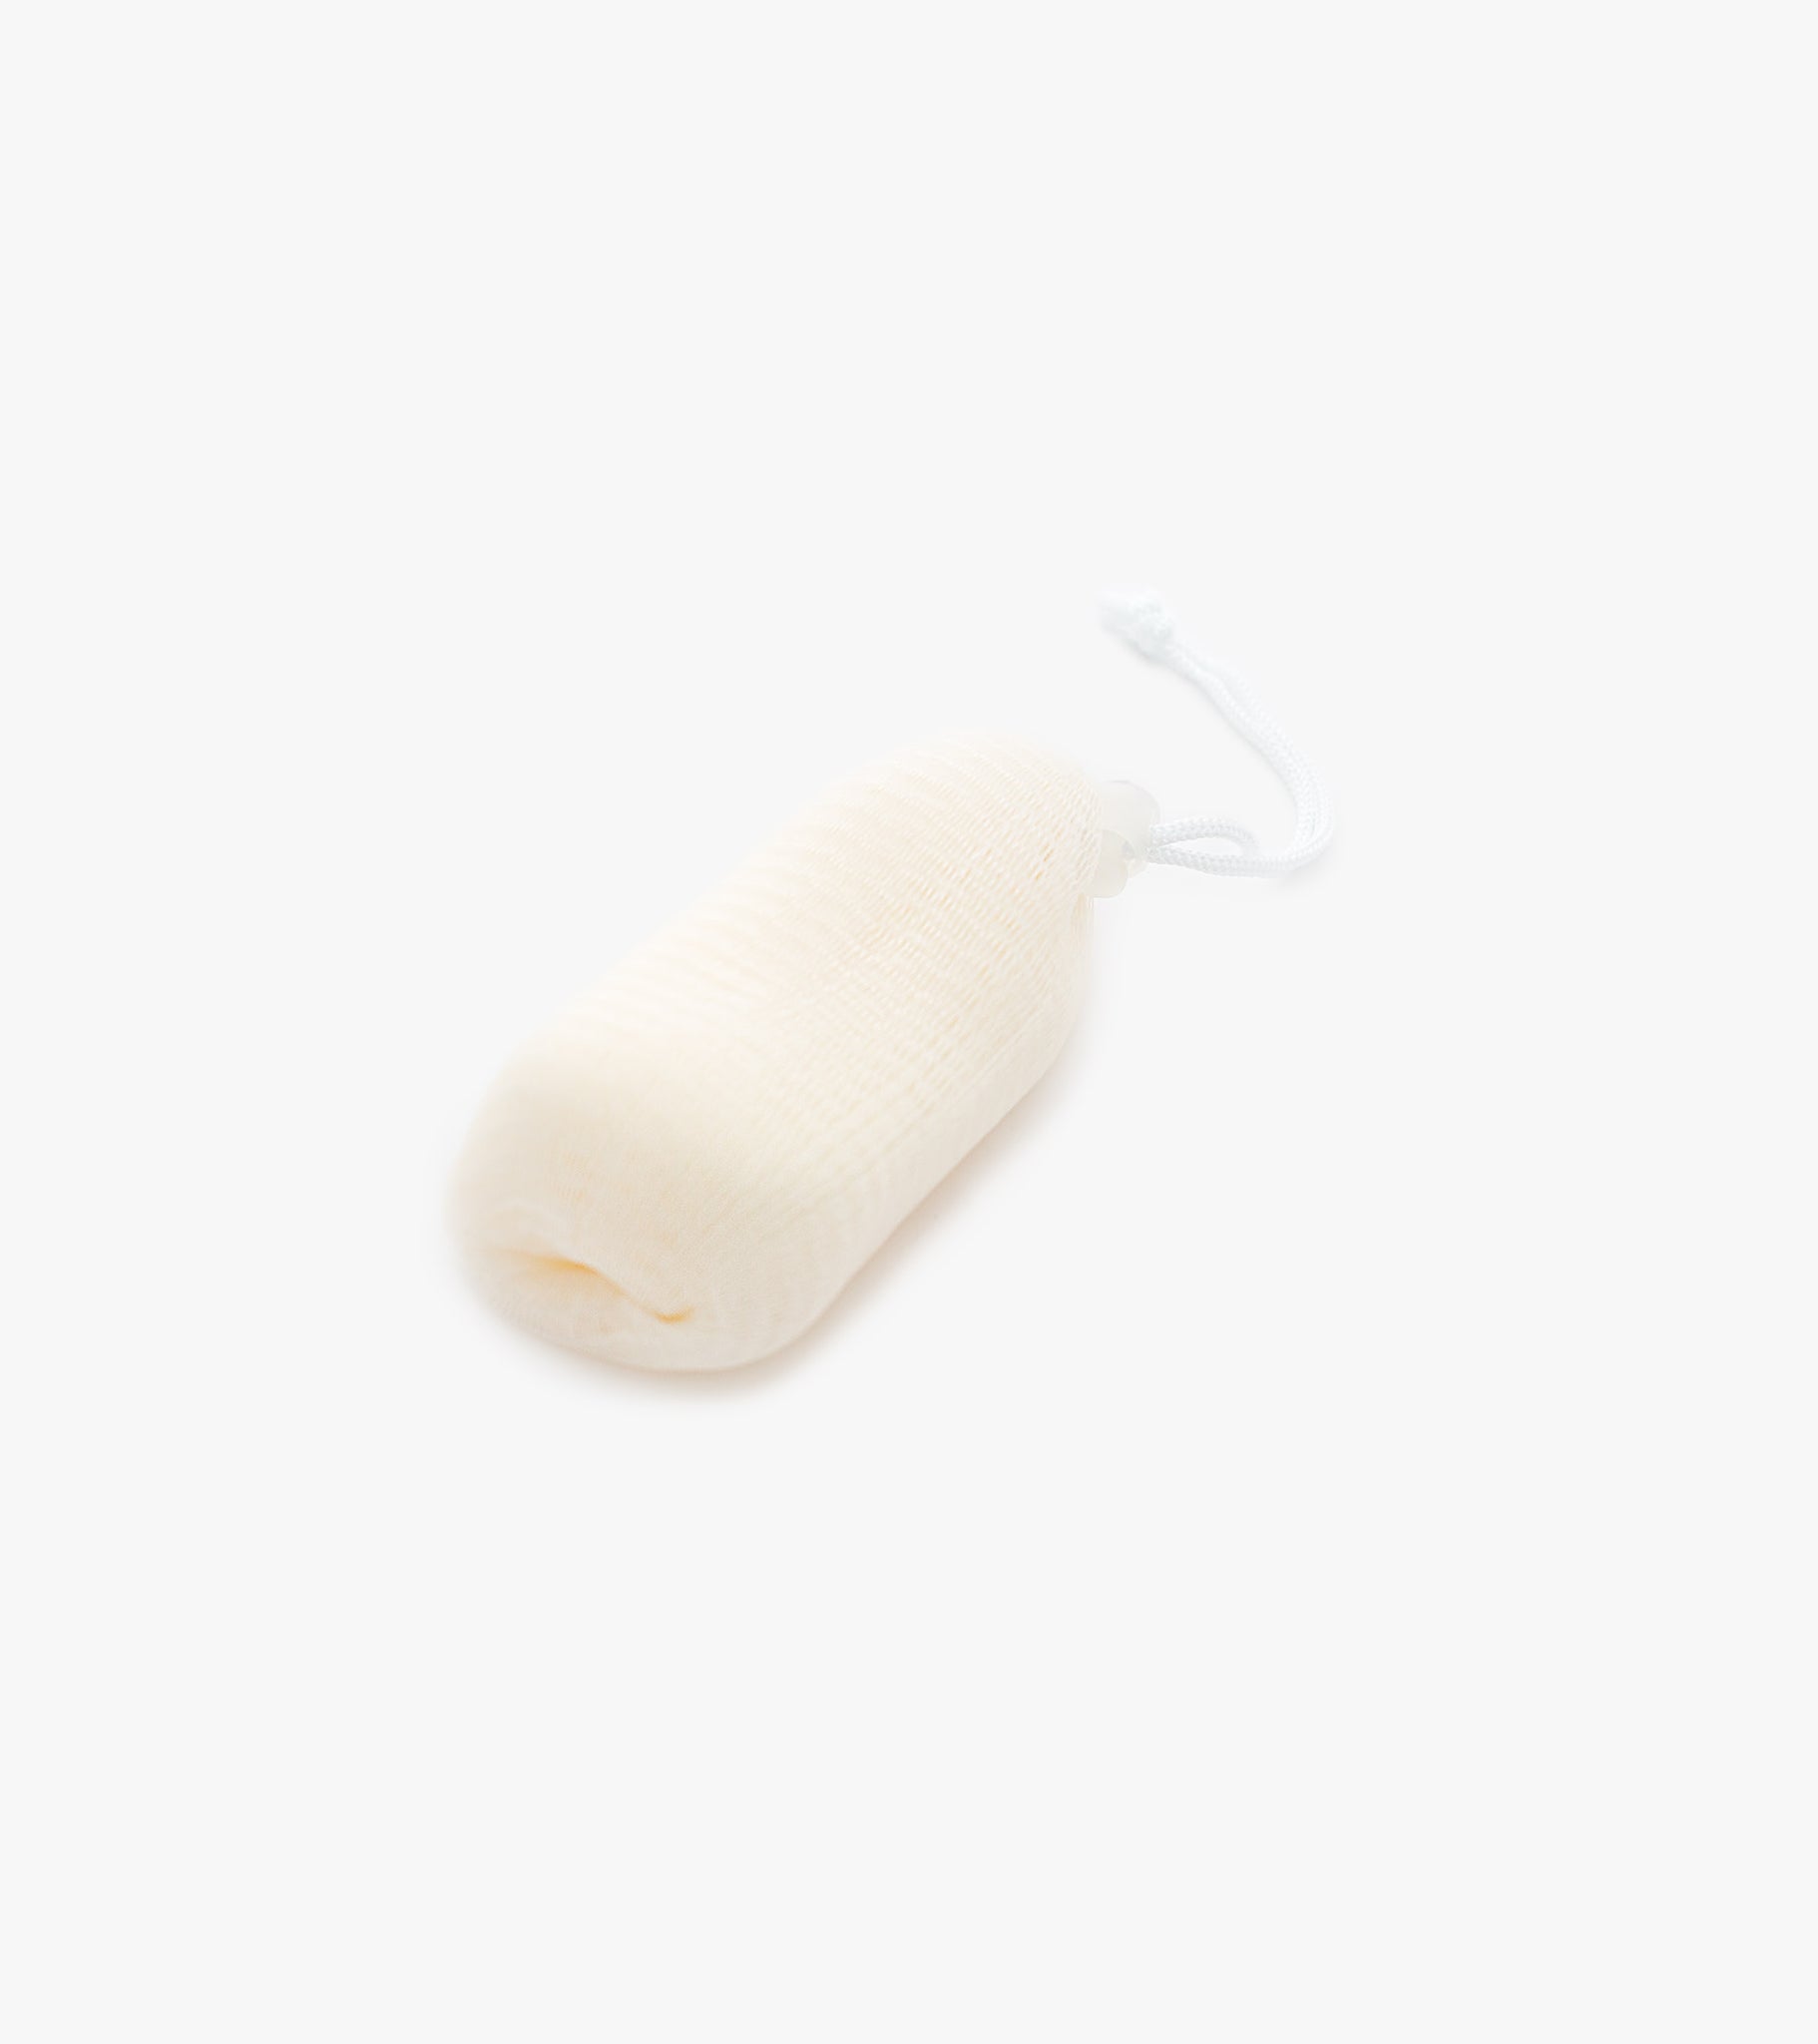 Manchon pour savon || Soap sleeve